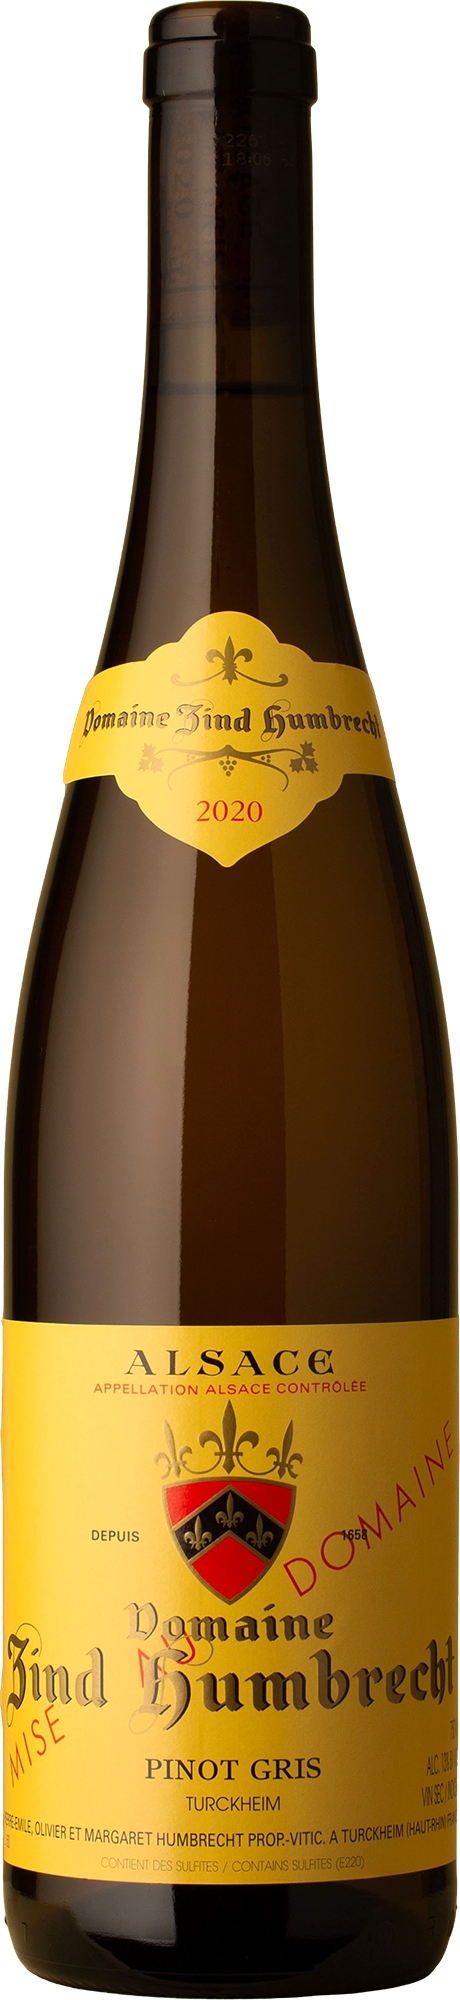 Zind Humbrecht - Turckheim Pinot Gris 2020 White Wine